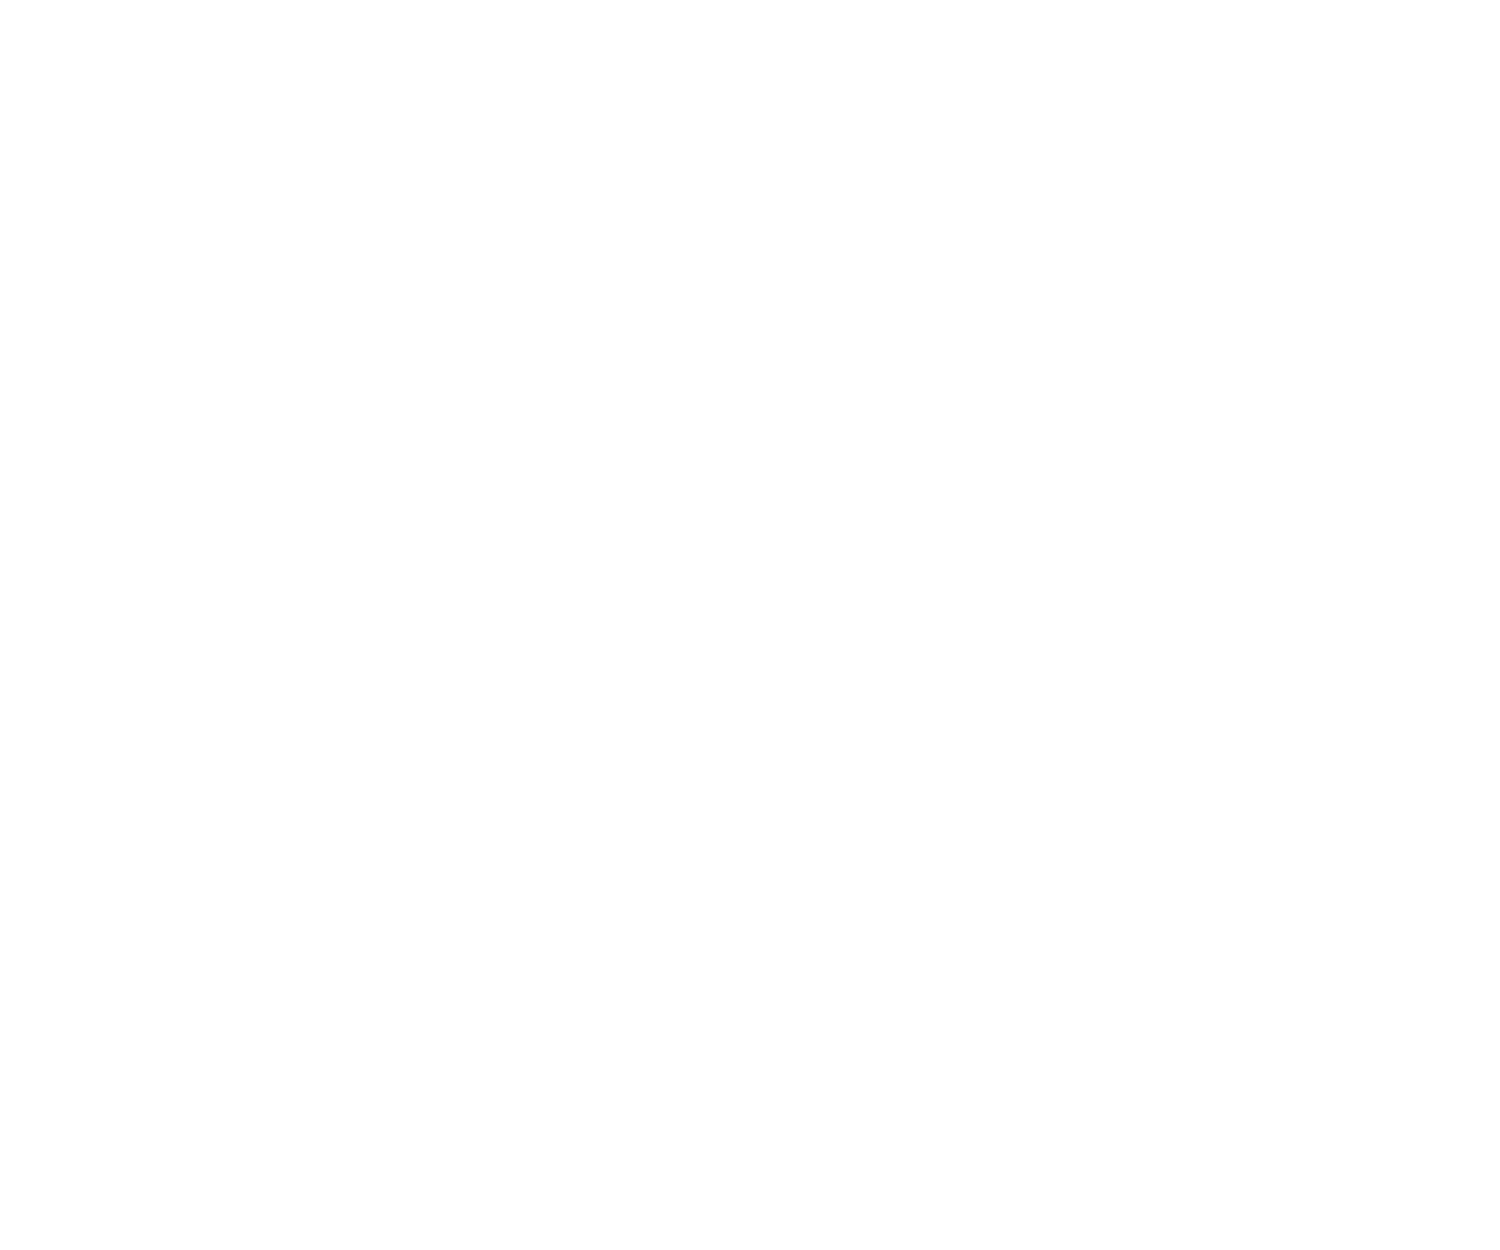 Rehearsal Room Music School